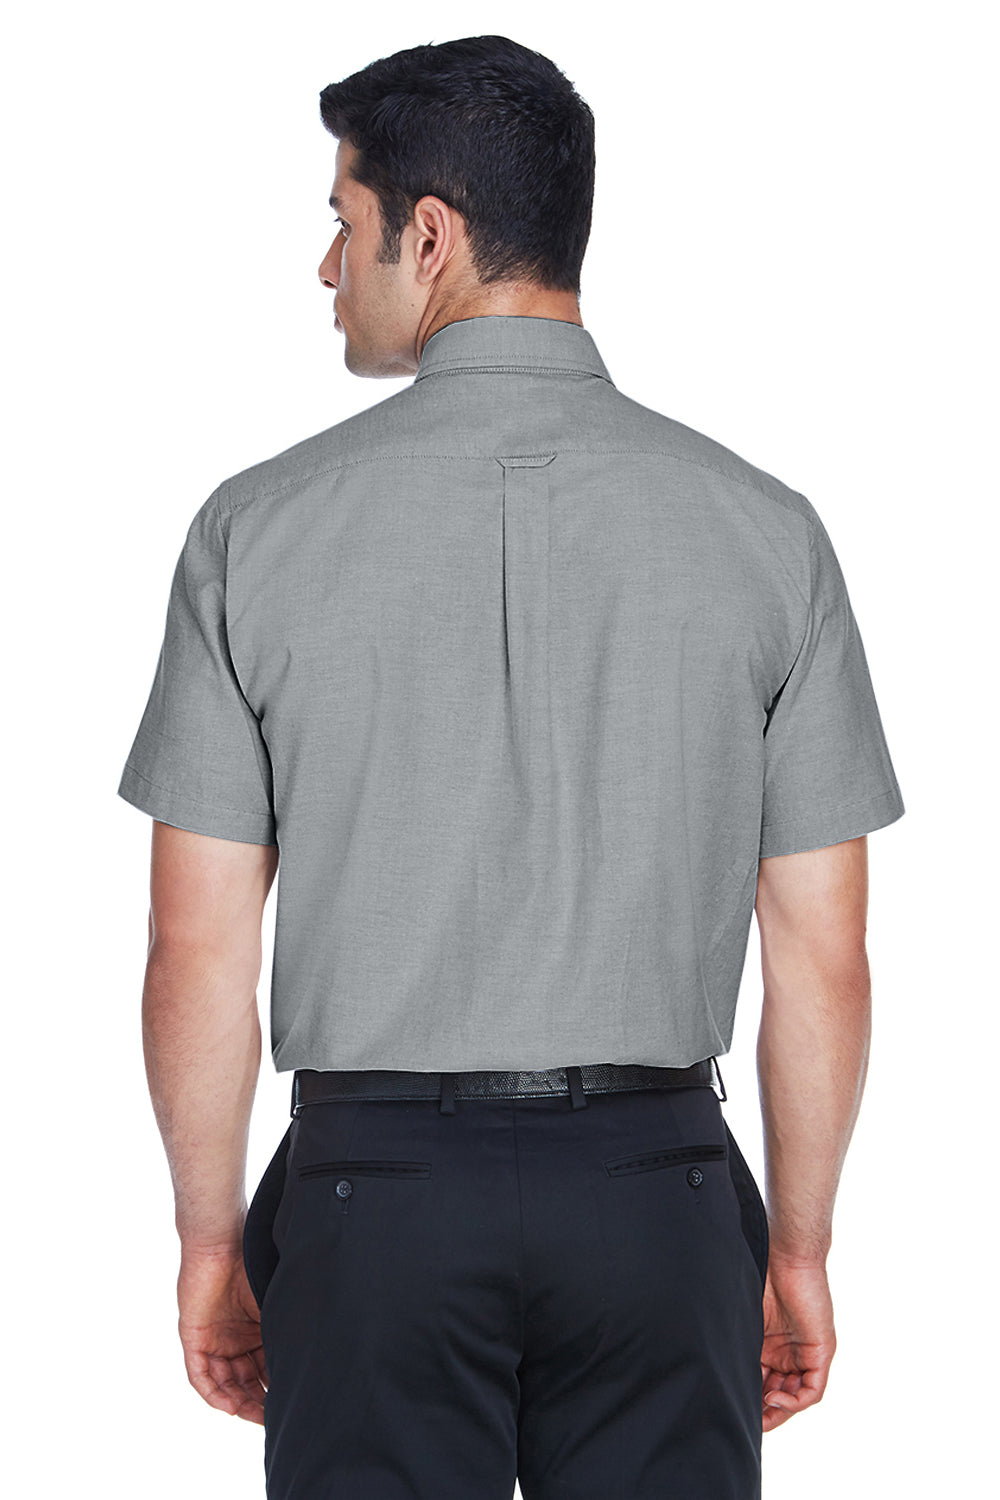 Harriton M600S Mens Oxford Wrinkle Resistant Short Sleeve Button Down Shirt w/ Pocket Oxford Grey Back